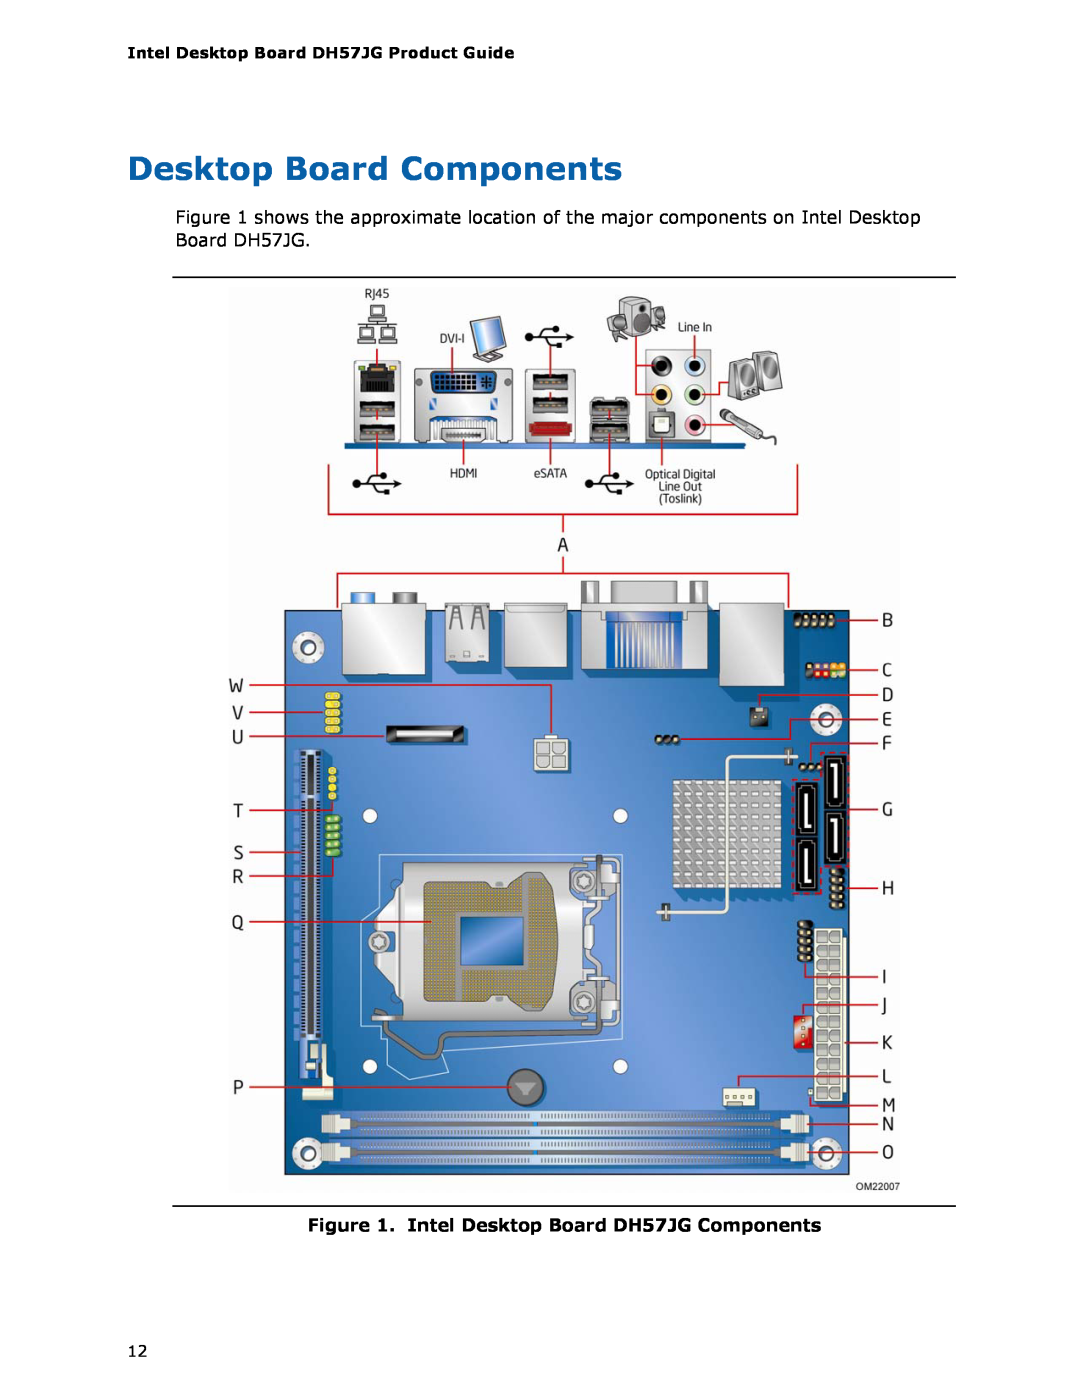 Intel BLKDH57JG Desktop Board Components, Intel Desktop Board DH57JG Components, Intel Desktop Board DH57JG Product Guide 